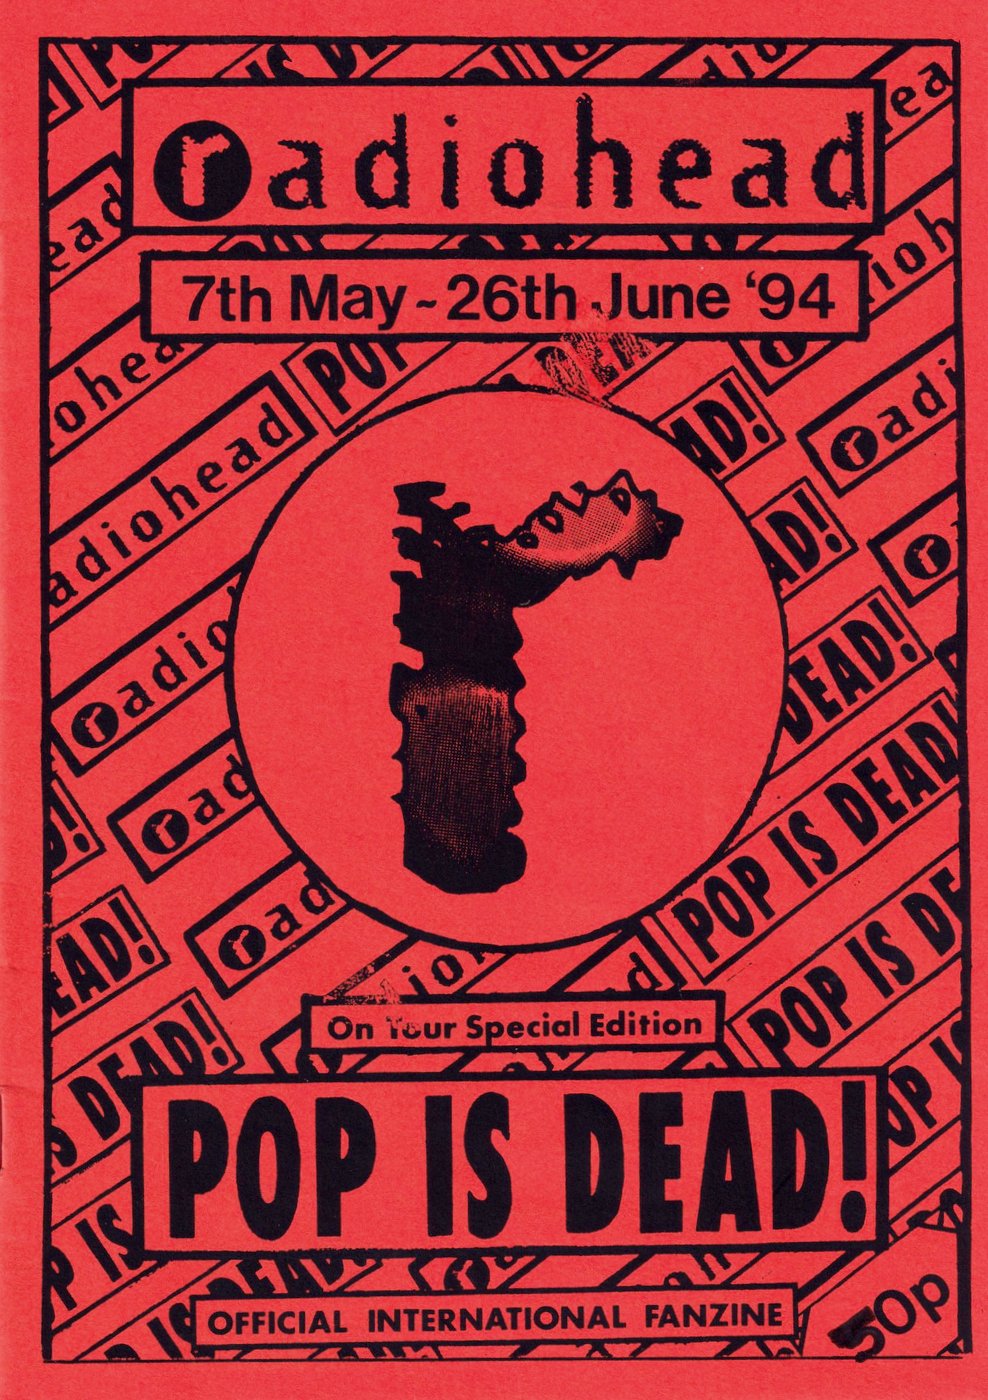 Pop is Dead - Radiohead fanzine (1994)